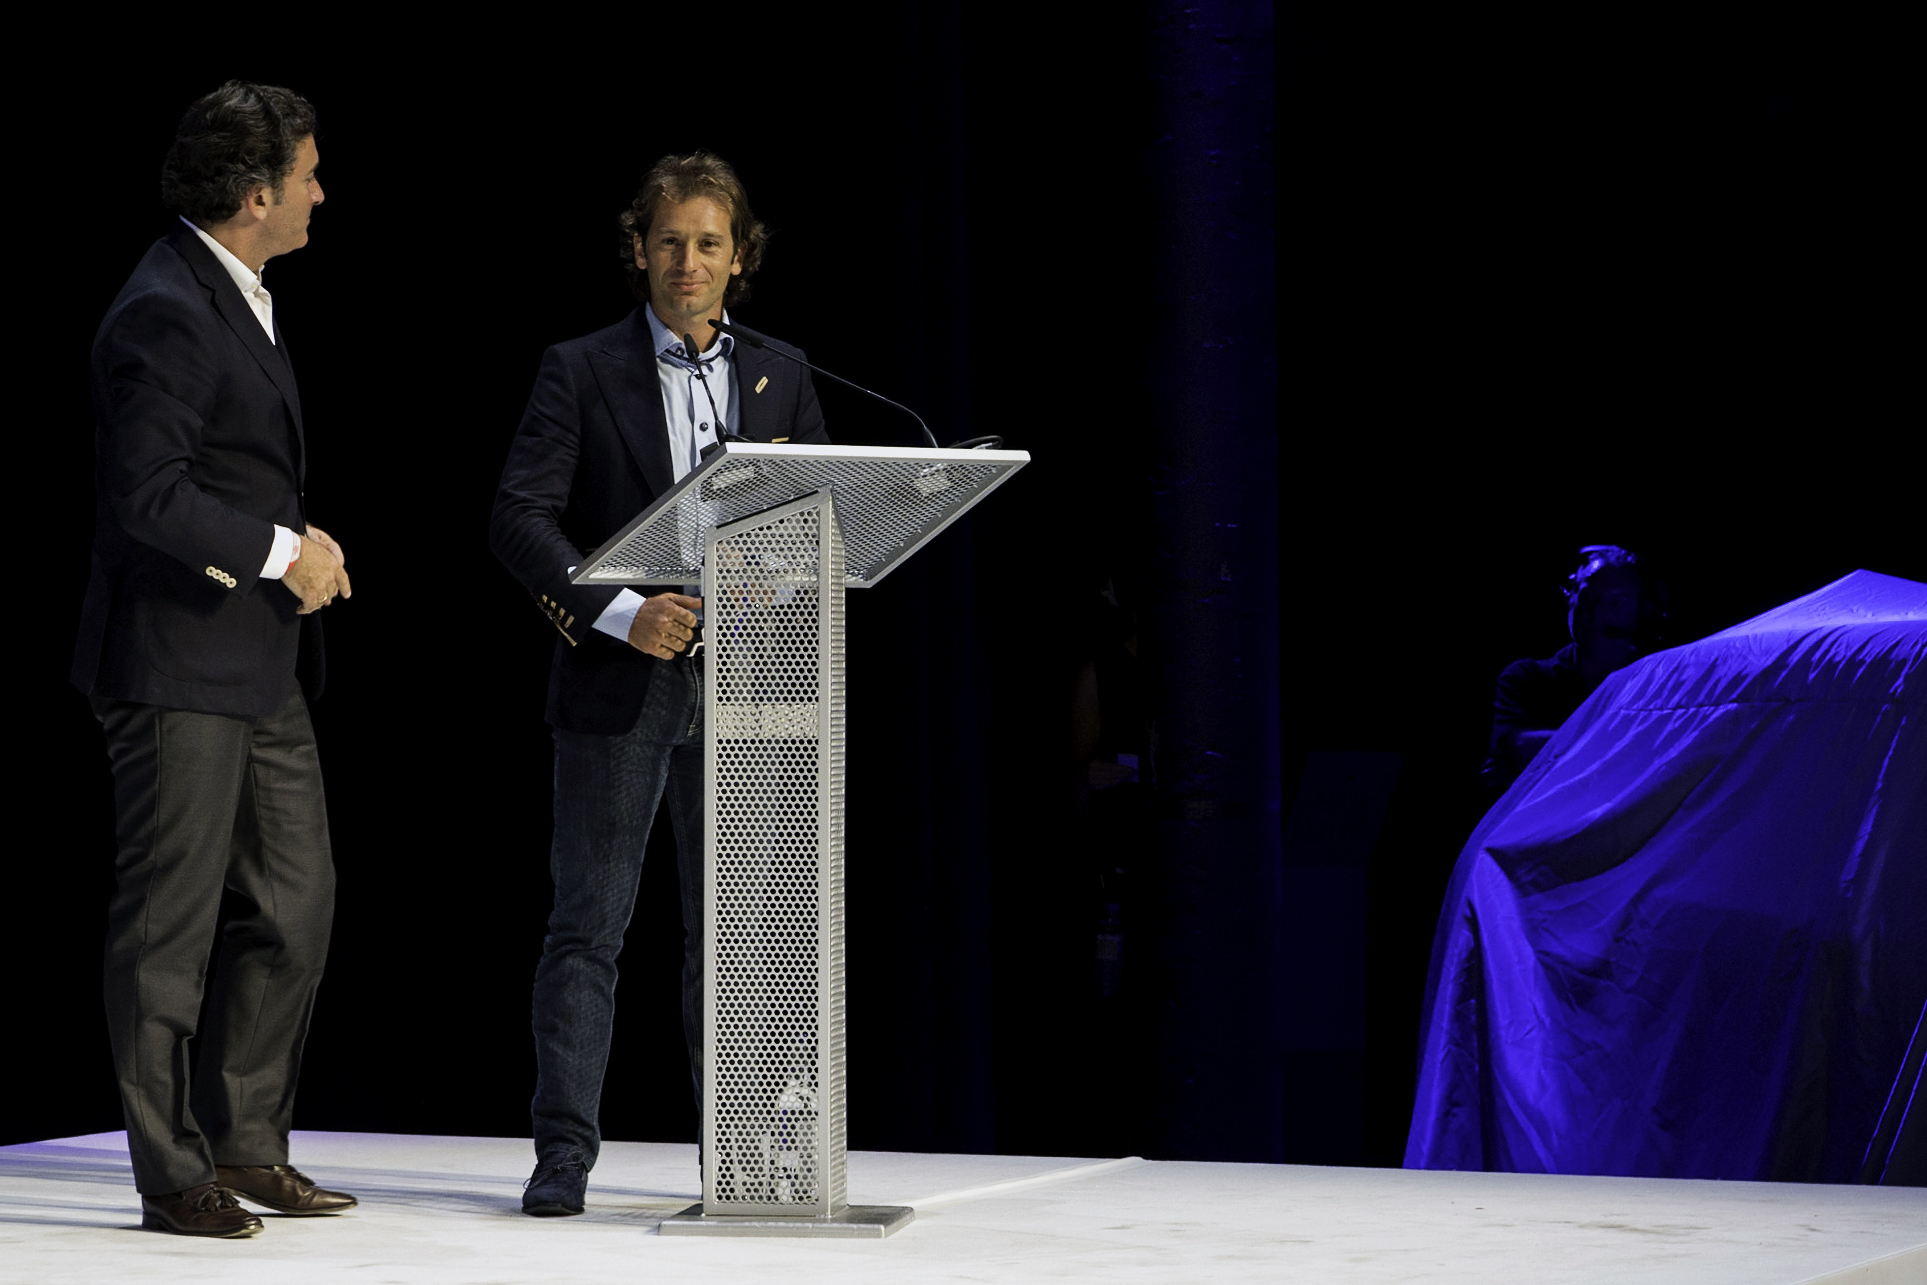 Jarno Trulli & Alejandro Agag - Formula-e launch, Roundhouse